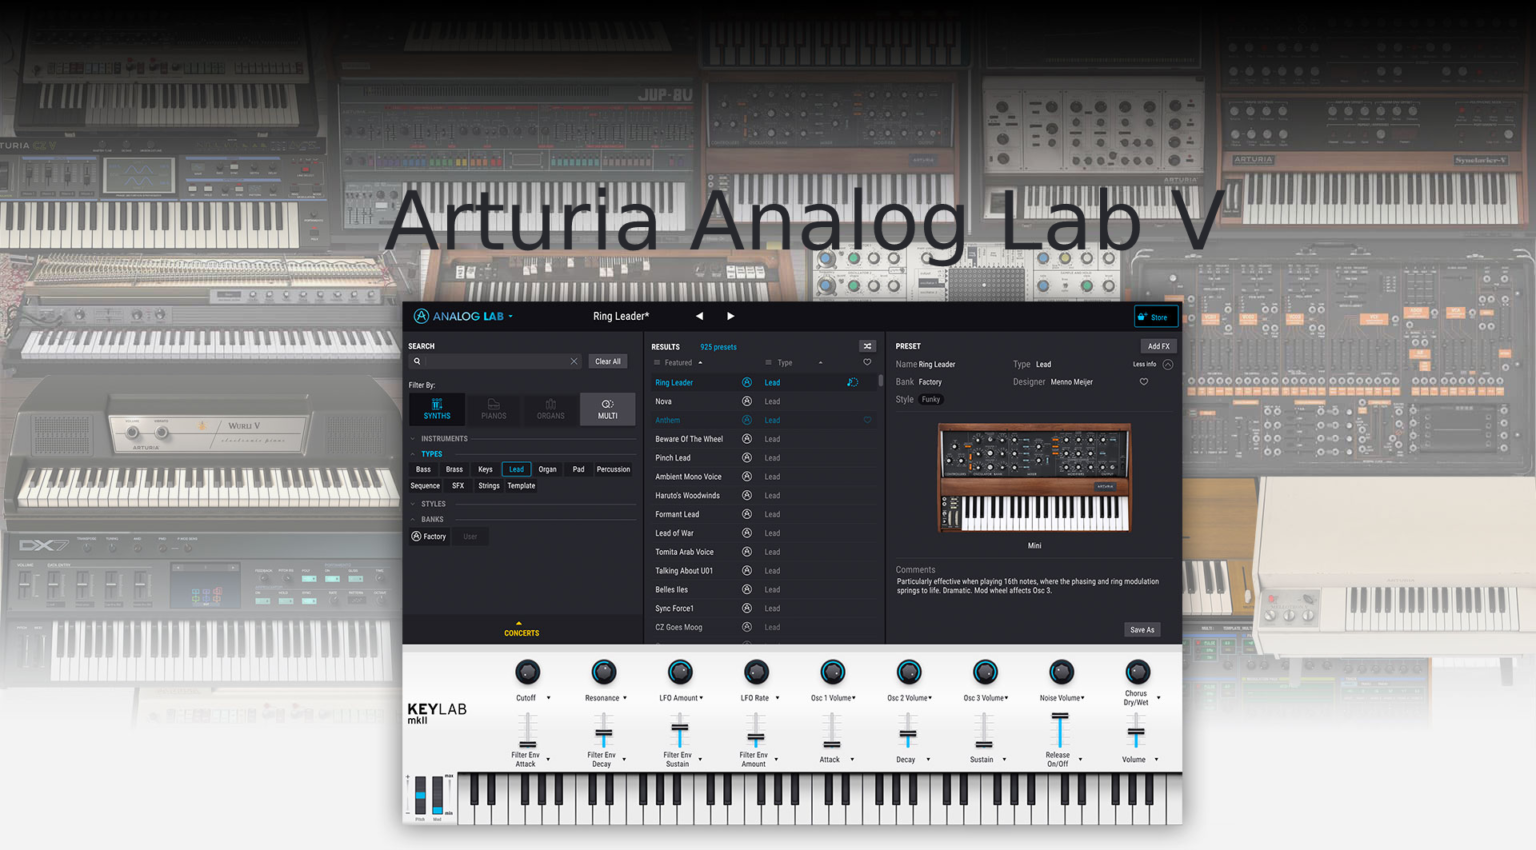 Arturia Analog lab V download the new version